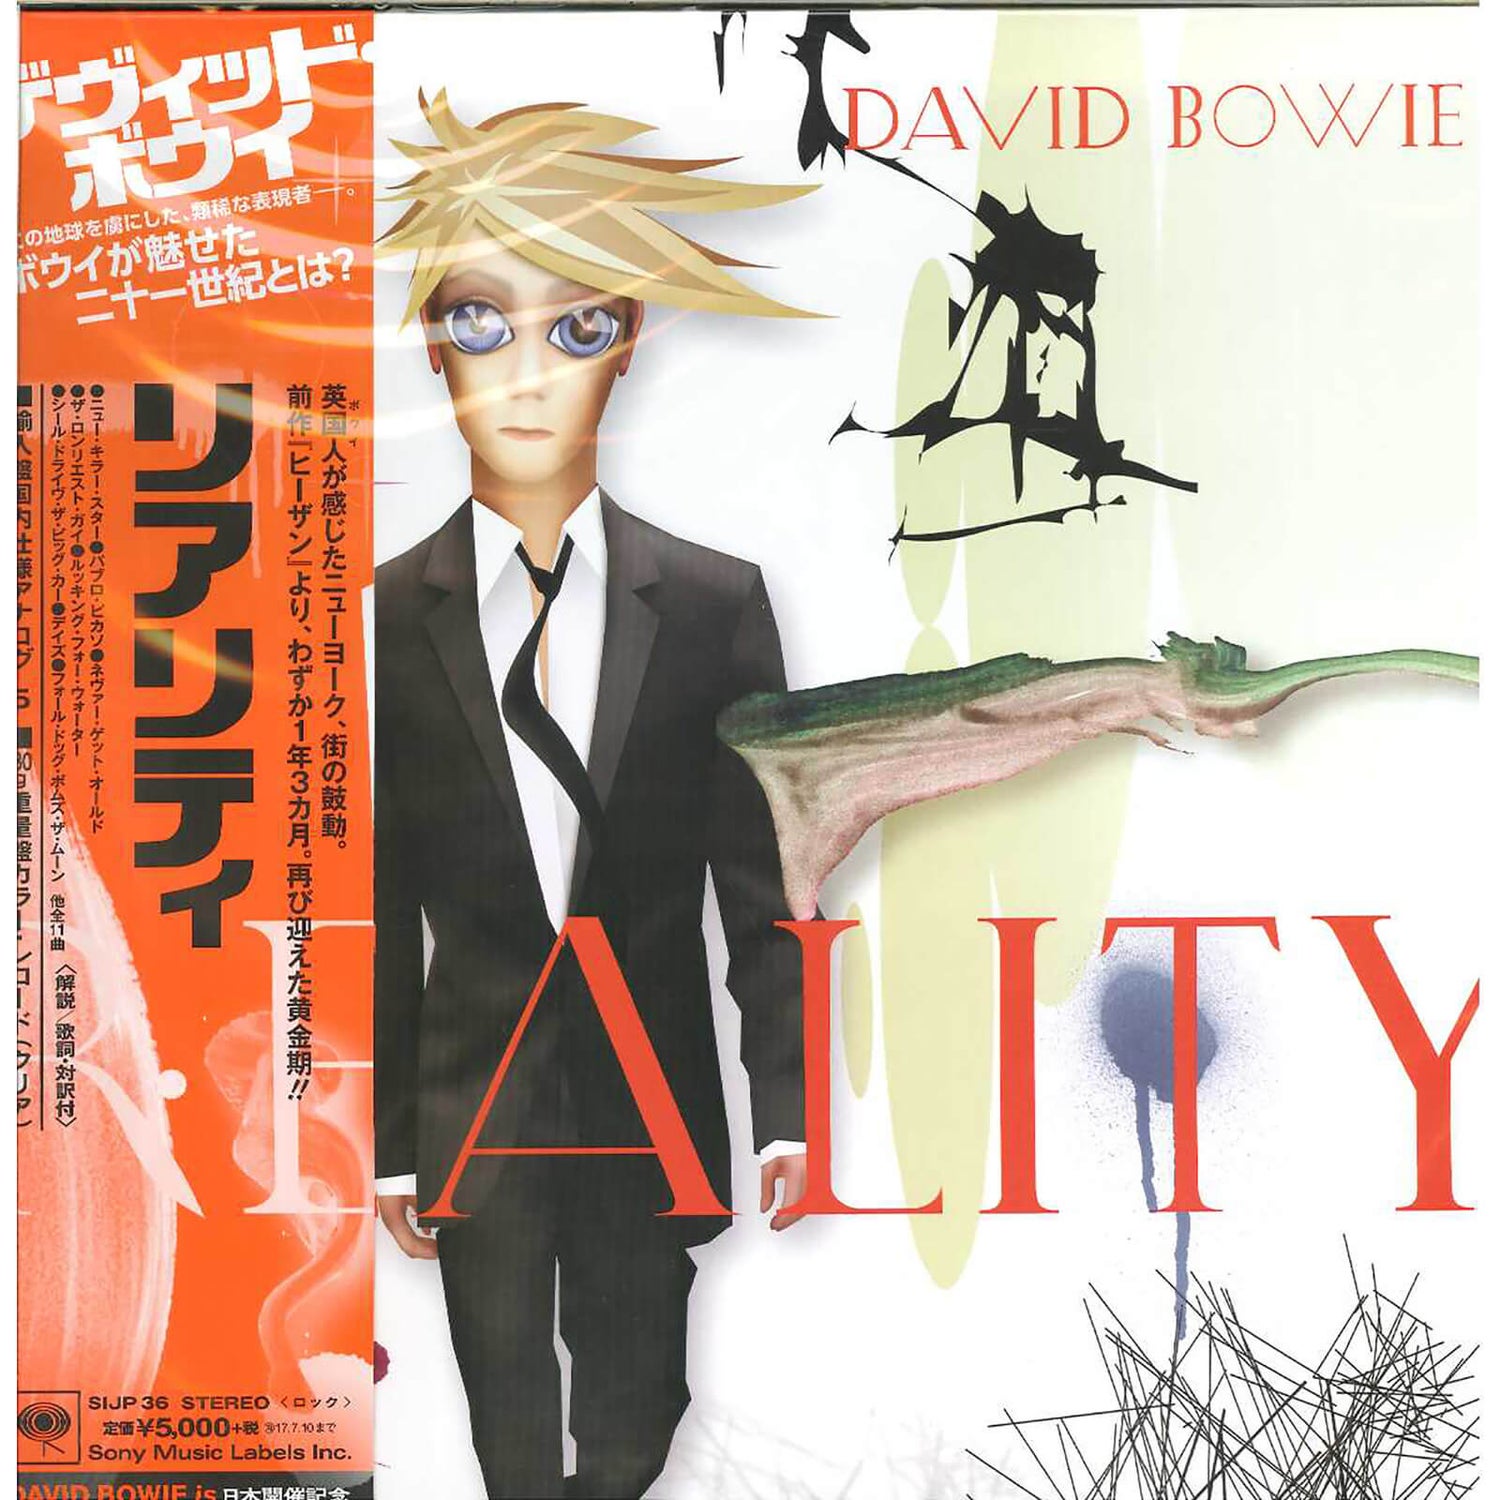 David Bowie - Reality LP Japanse Editie